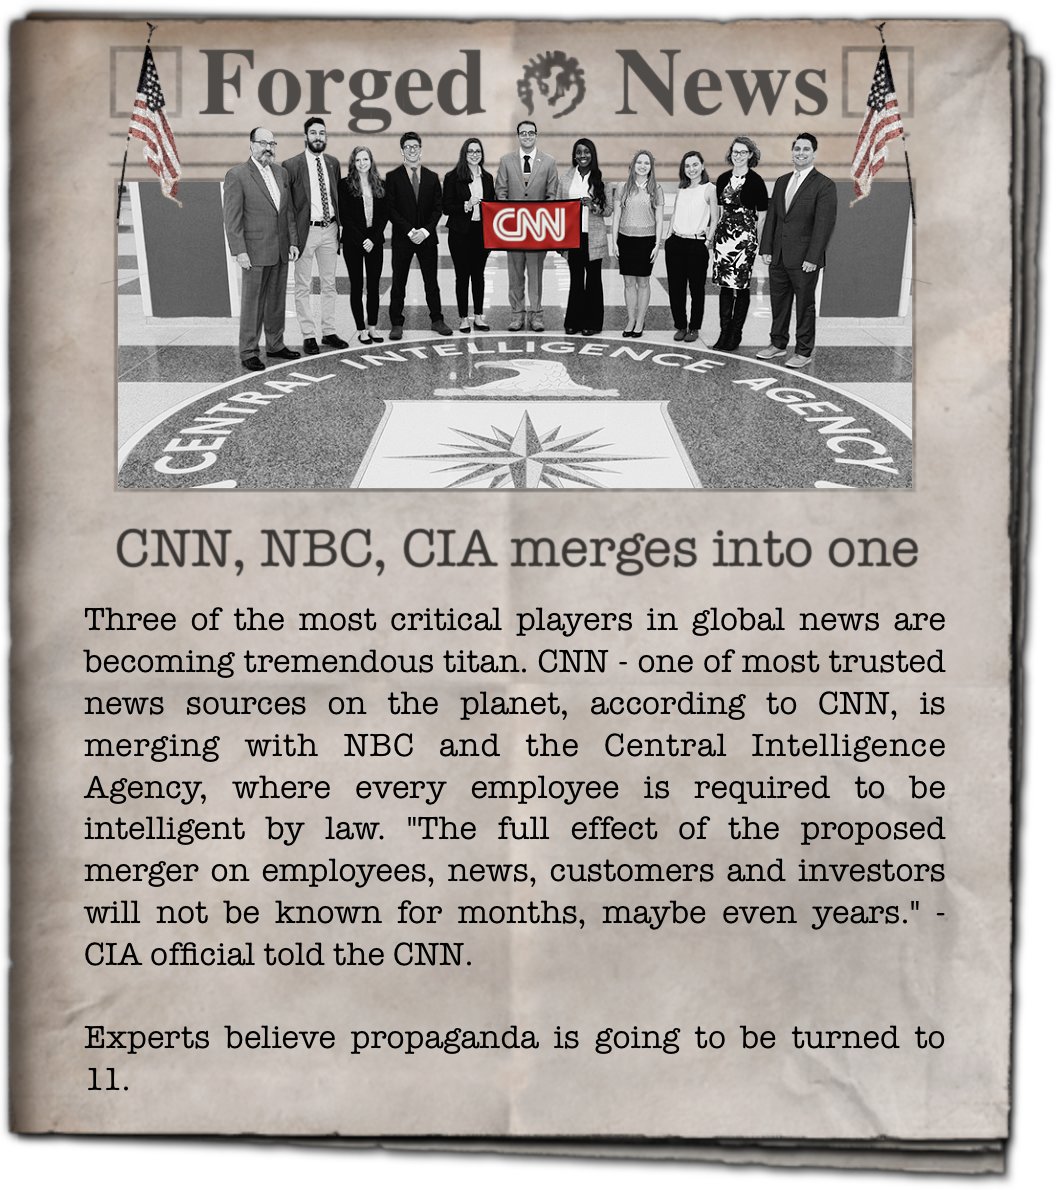 @Ukraine66251776 BBC, CNN, NPR, CIA... 
They have all merged into one.